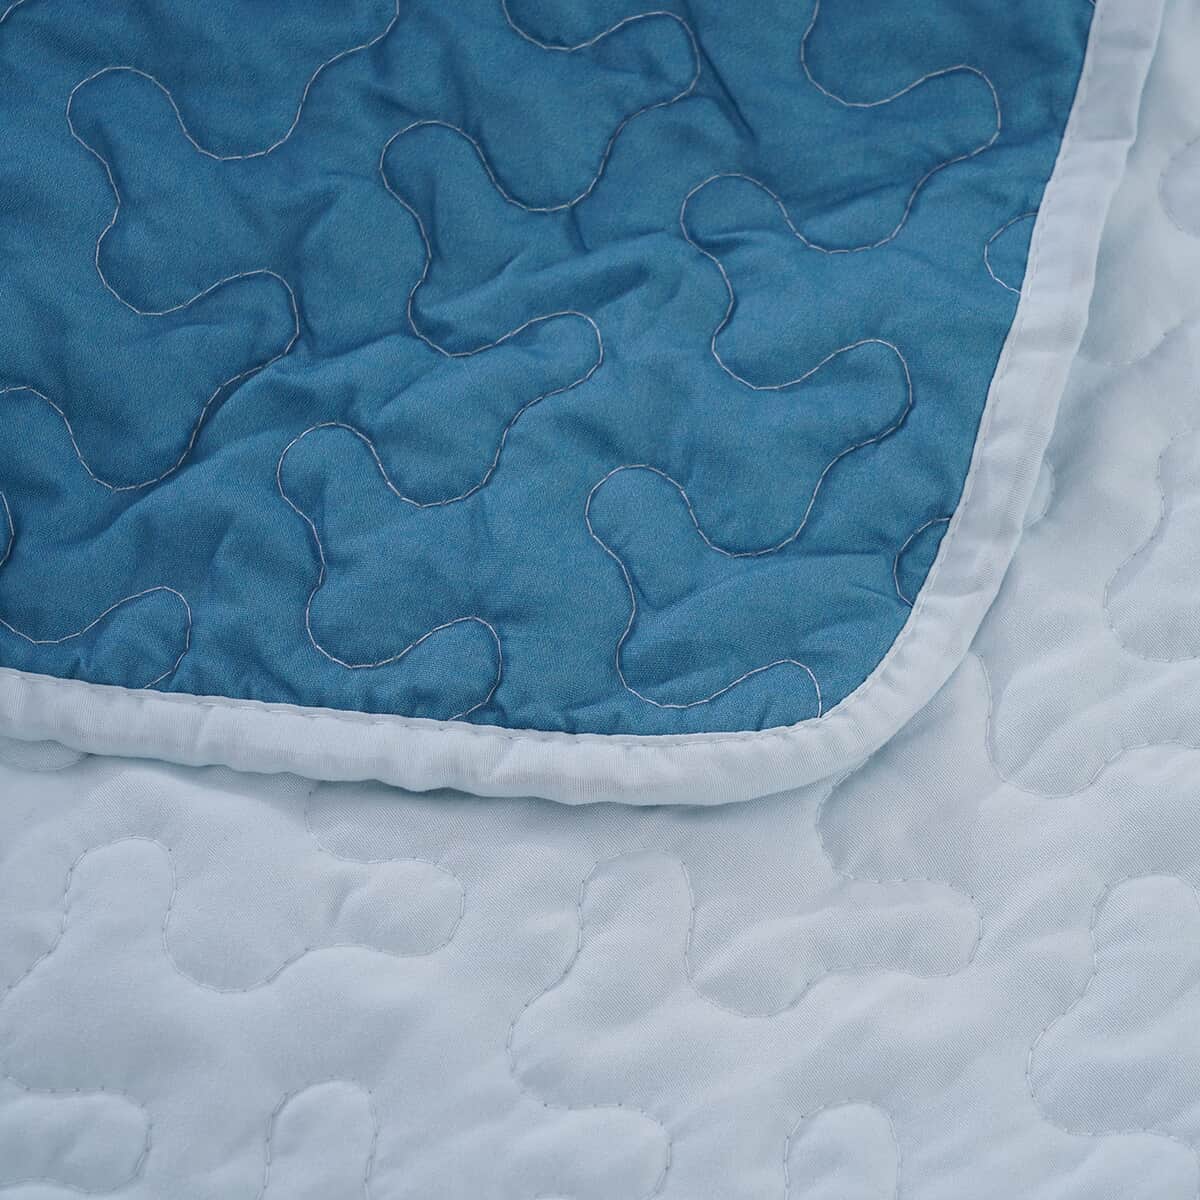 HOMESMART Teal Garden Digital Print 100% Microfiber Quilted Bedspread and 2 Pillow Shams - Queen image number 4